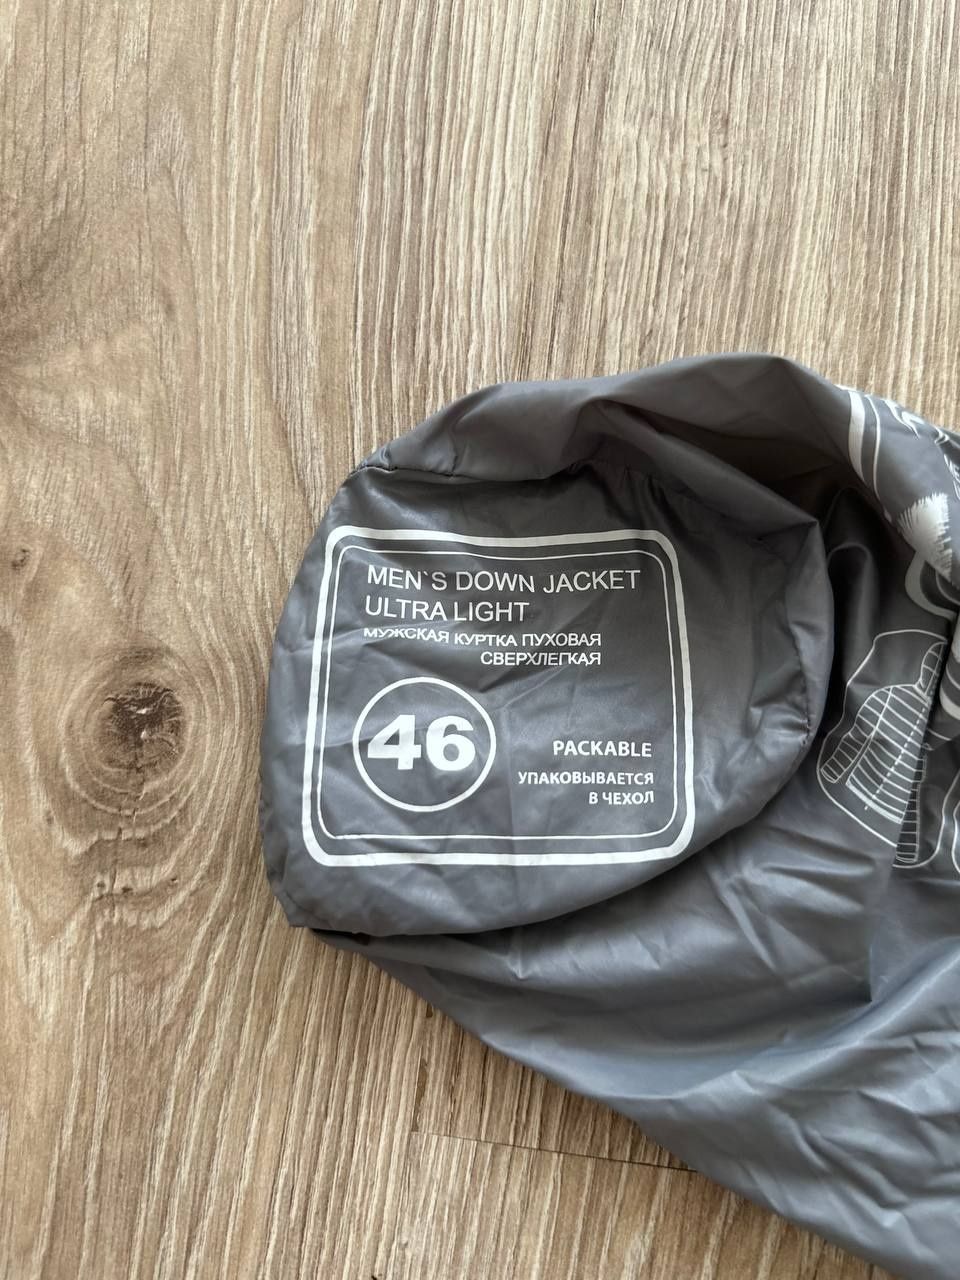 Сверхлегкая пуховая куртка Outventure 46 размер / ультралайт пуховка